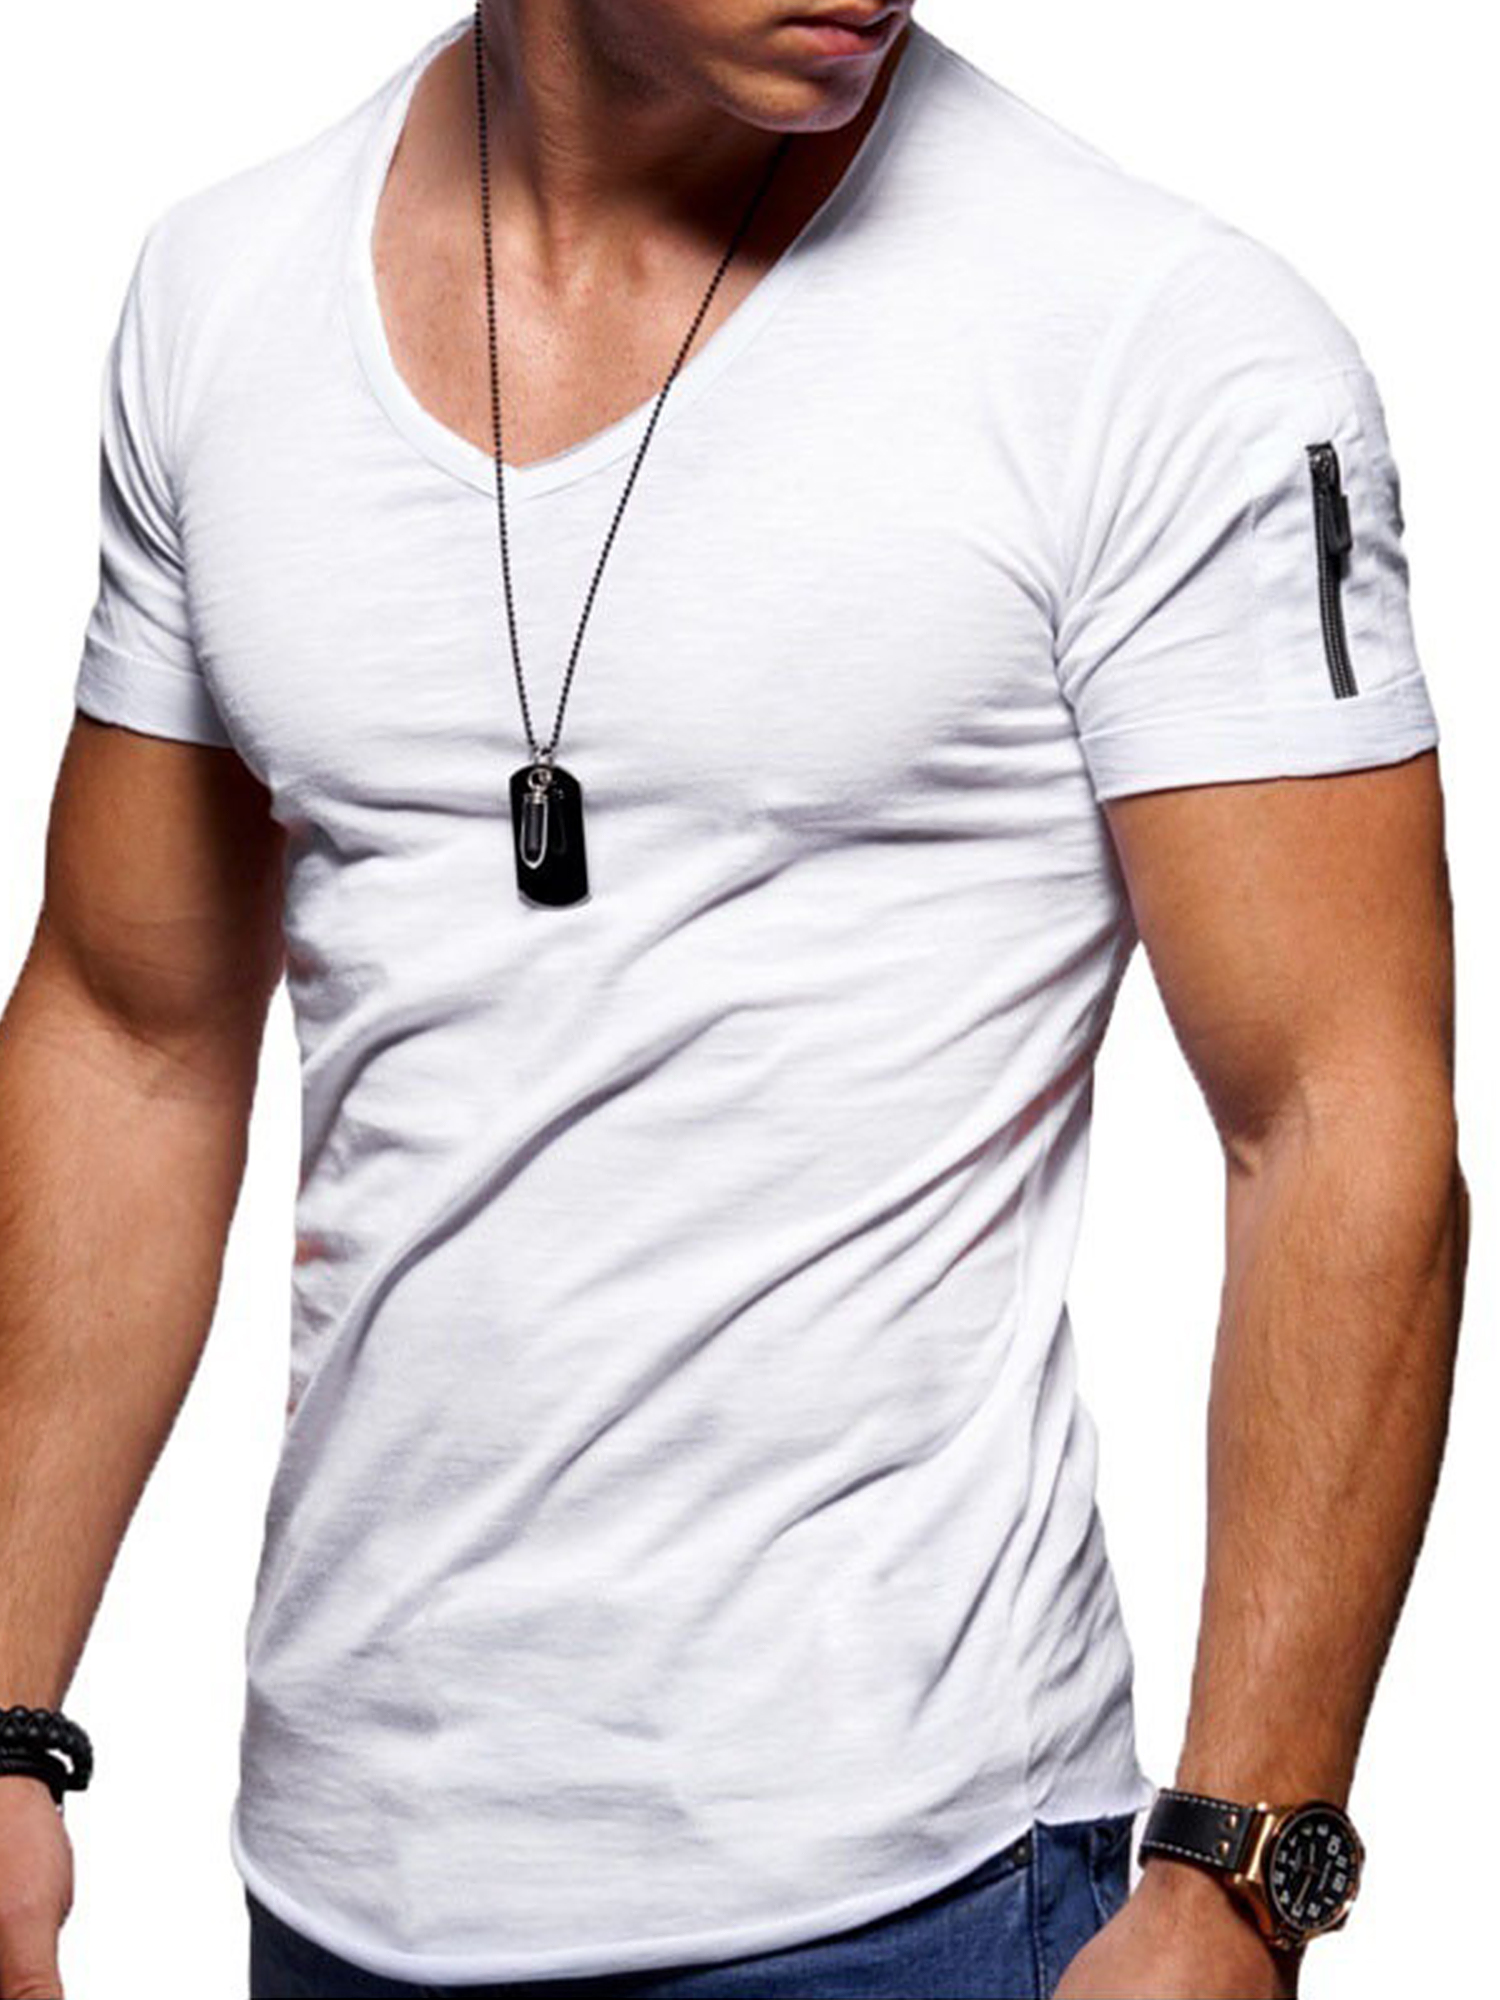 MAWCLOS Fashion Summer Men T shirt Casual Short Sleeve V-neck T-shirts Black White Plus Size V Neck Tops Tee Shirt Slim Fit - image 1 of 2